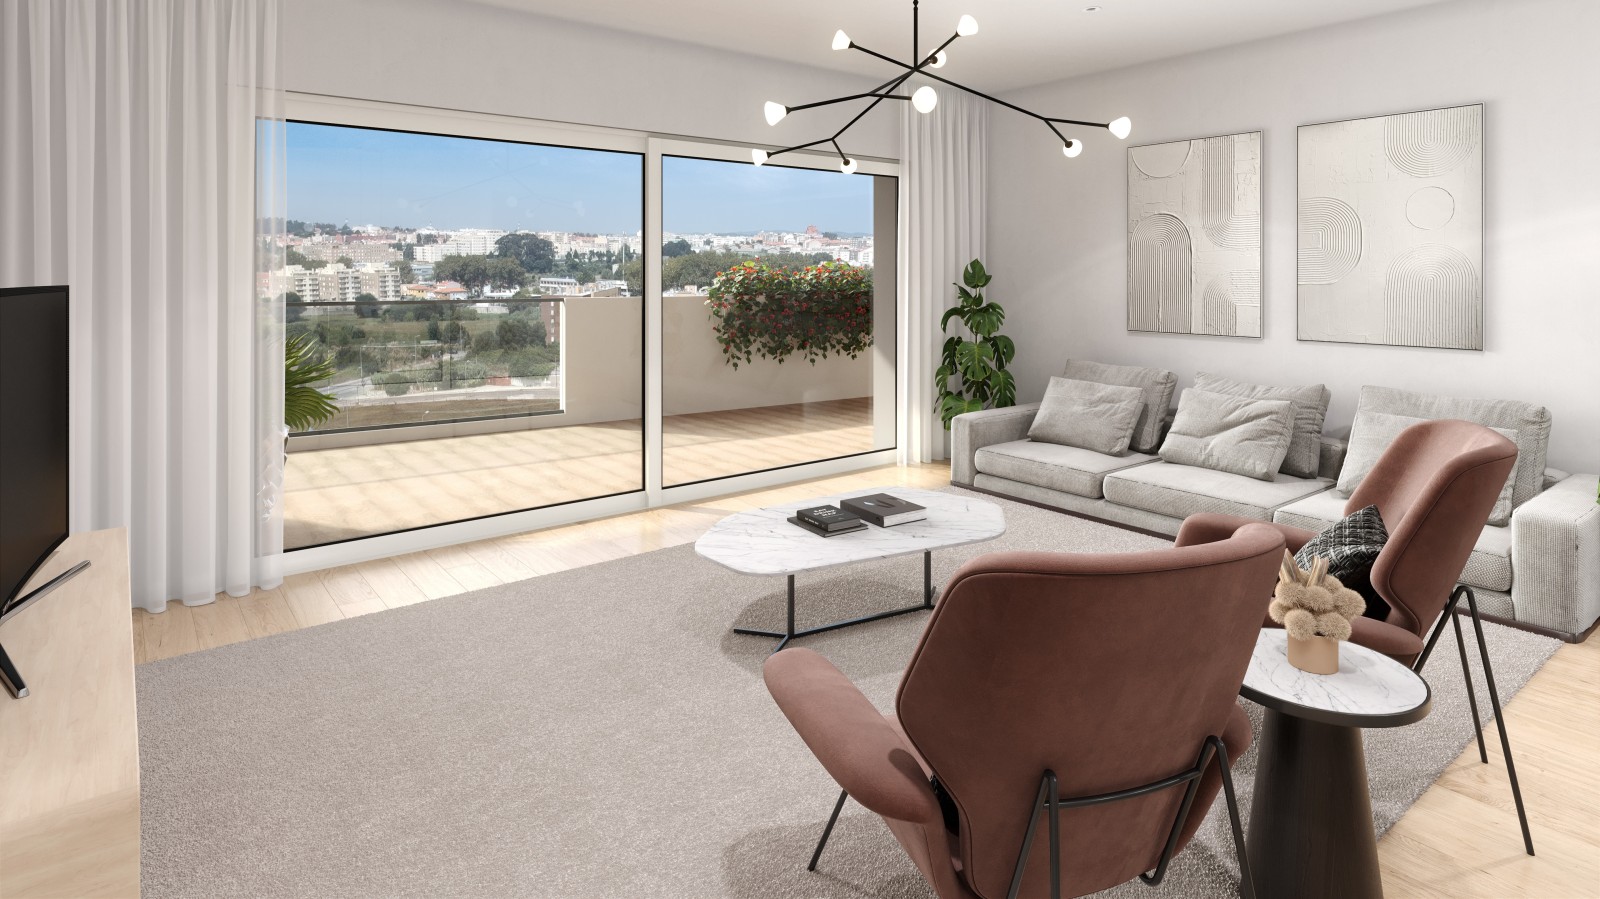 Appartement neuf avec patio, à vendre, à Ramalde, Porto_241165